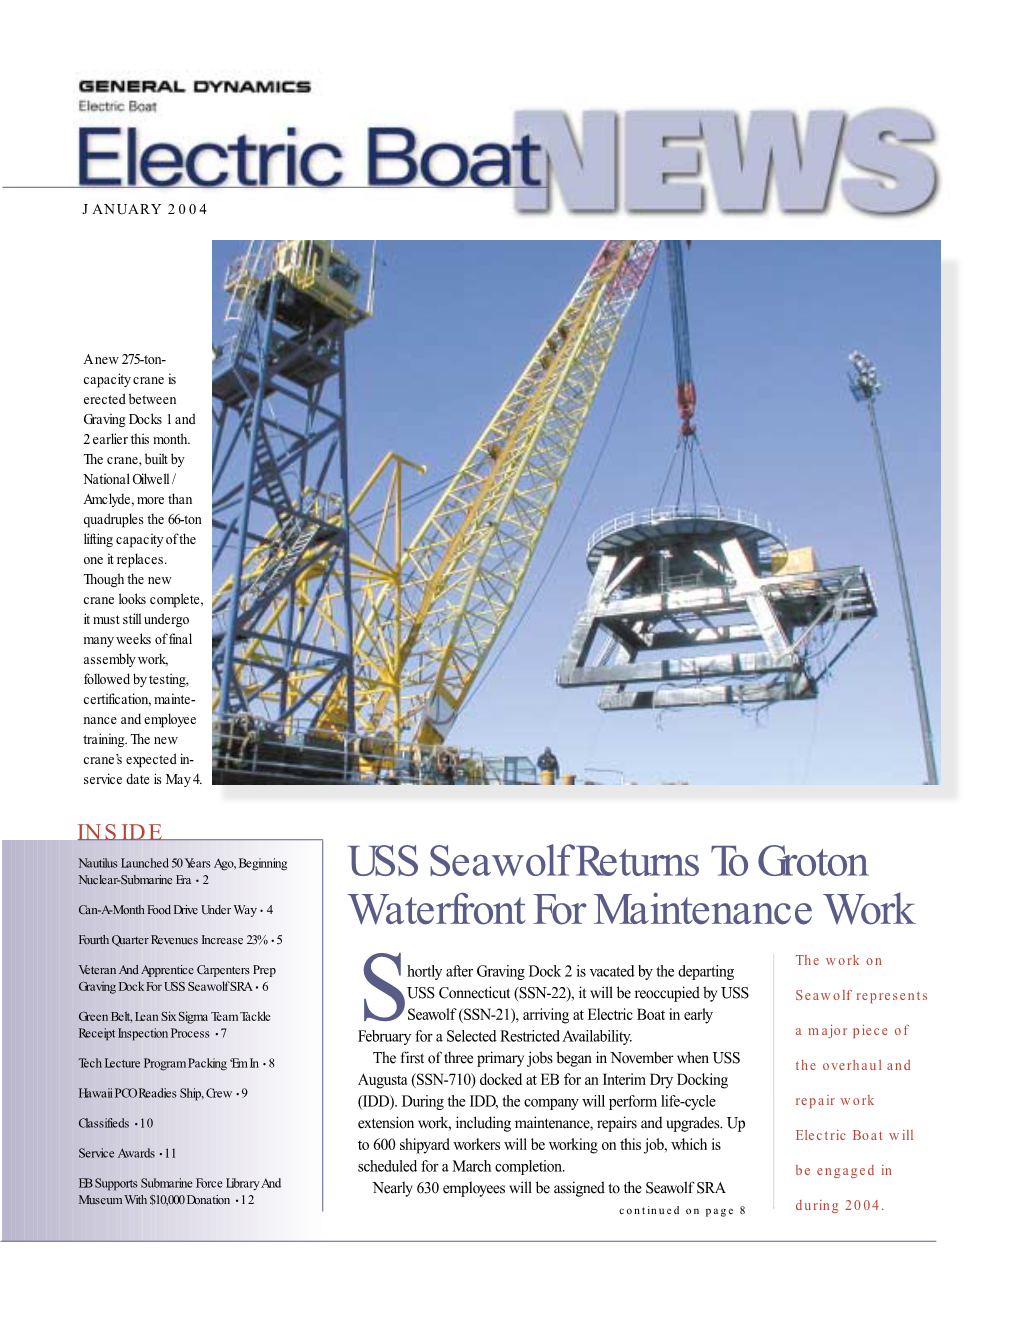 USS Seawolf Returns to Groton Waterfront for Maintenance Work